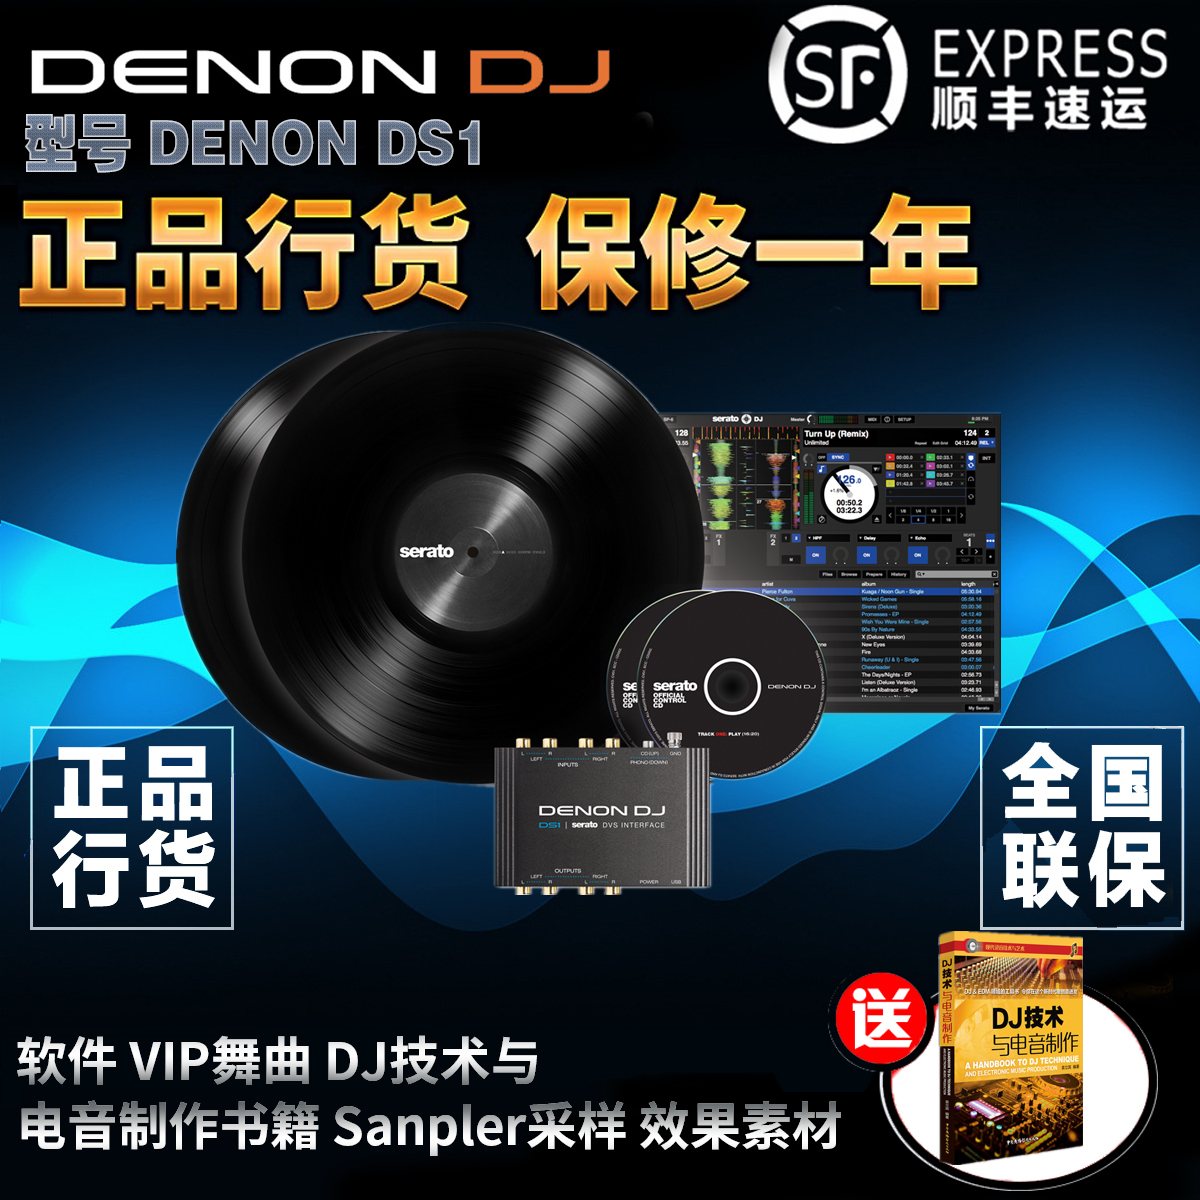 Denon/Tianlong DJ DS1 SERATO DJ DVS 4 in/out DJ sound card/DJ audio interface